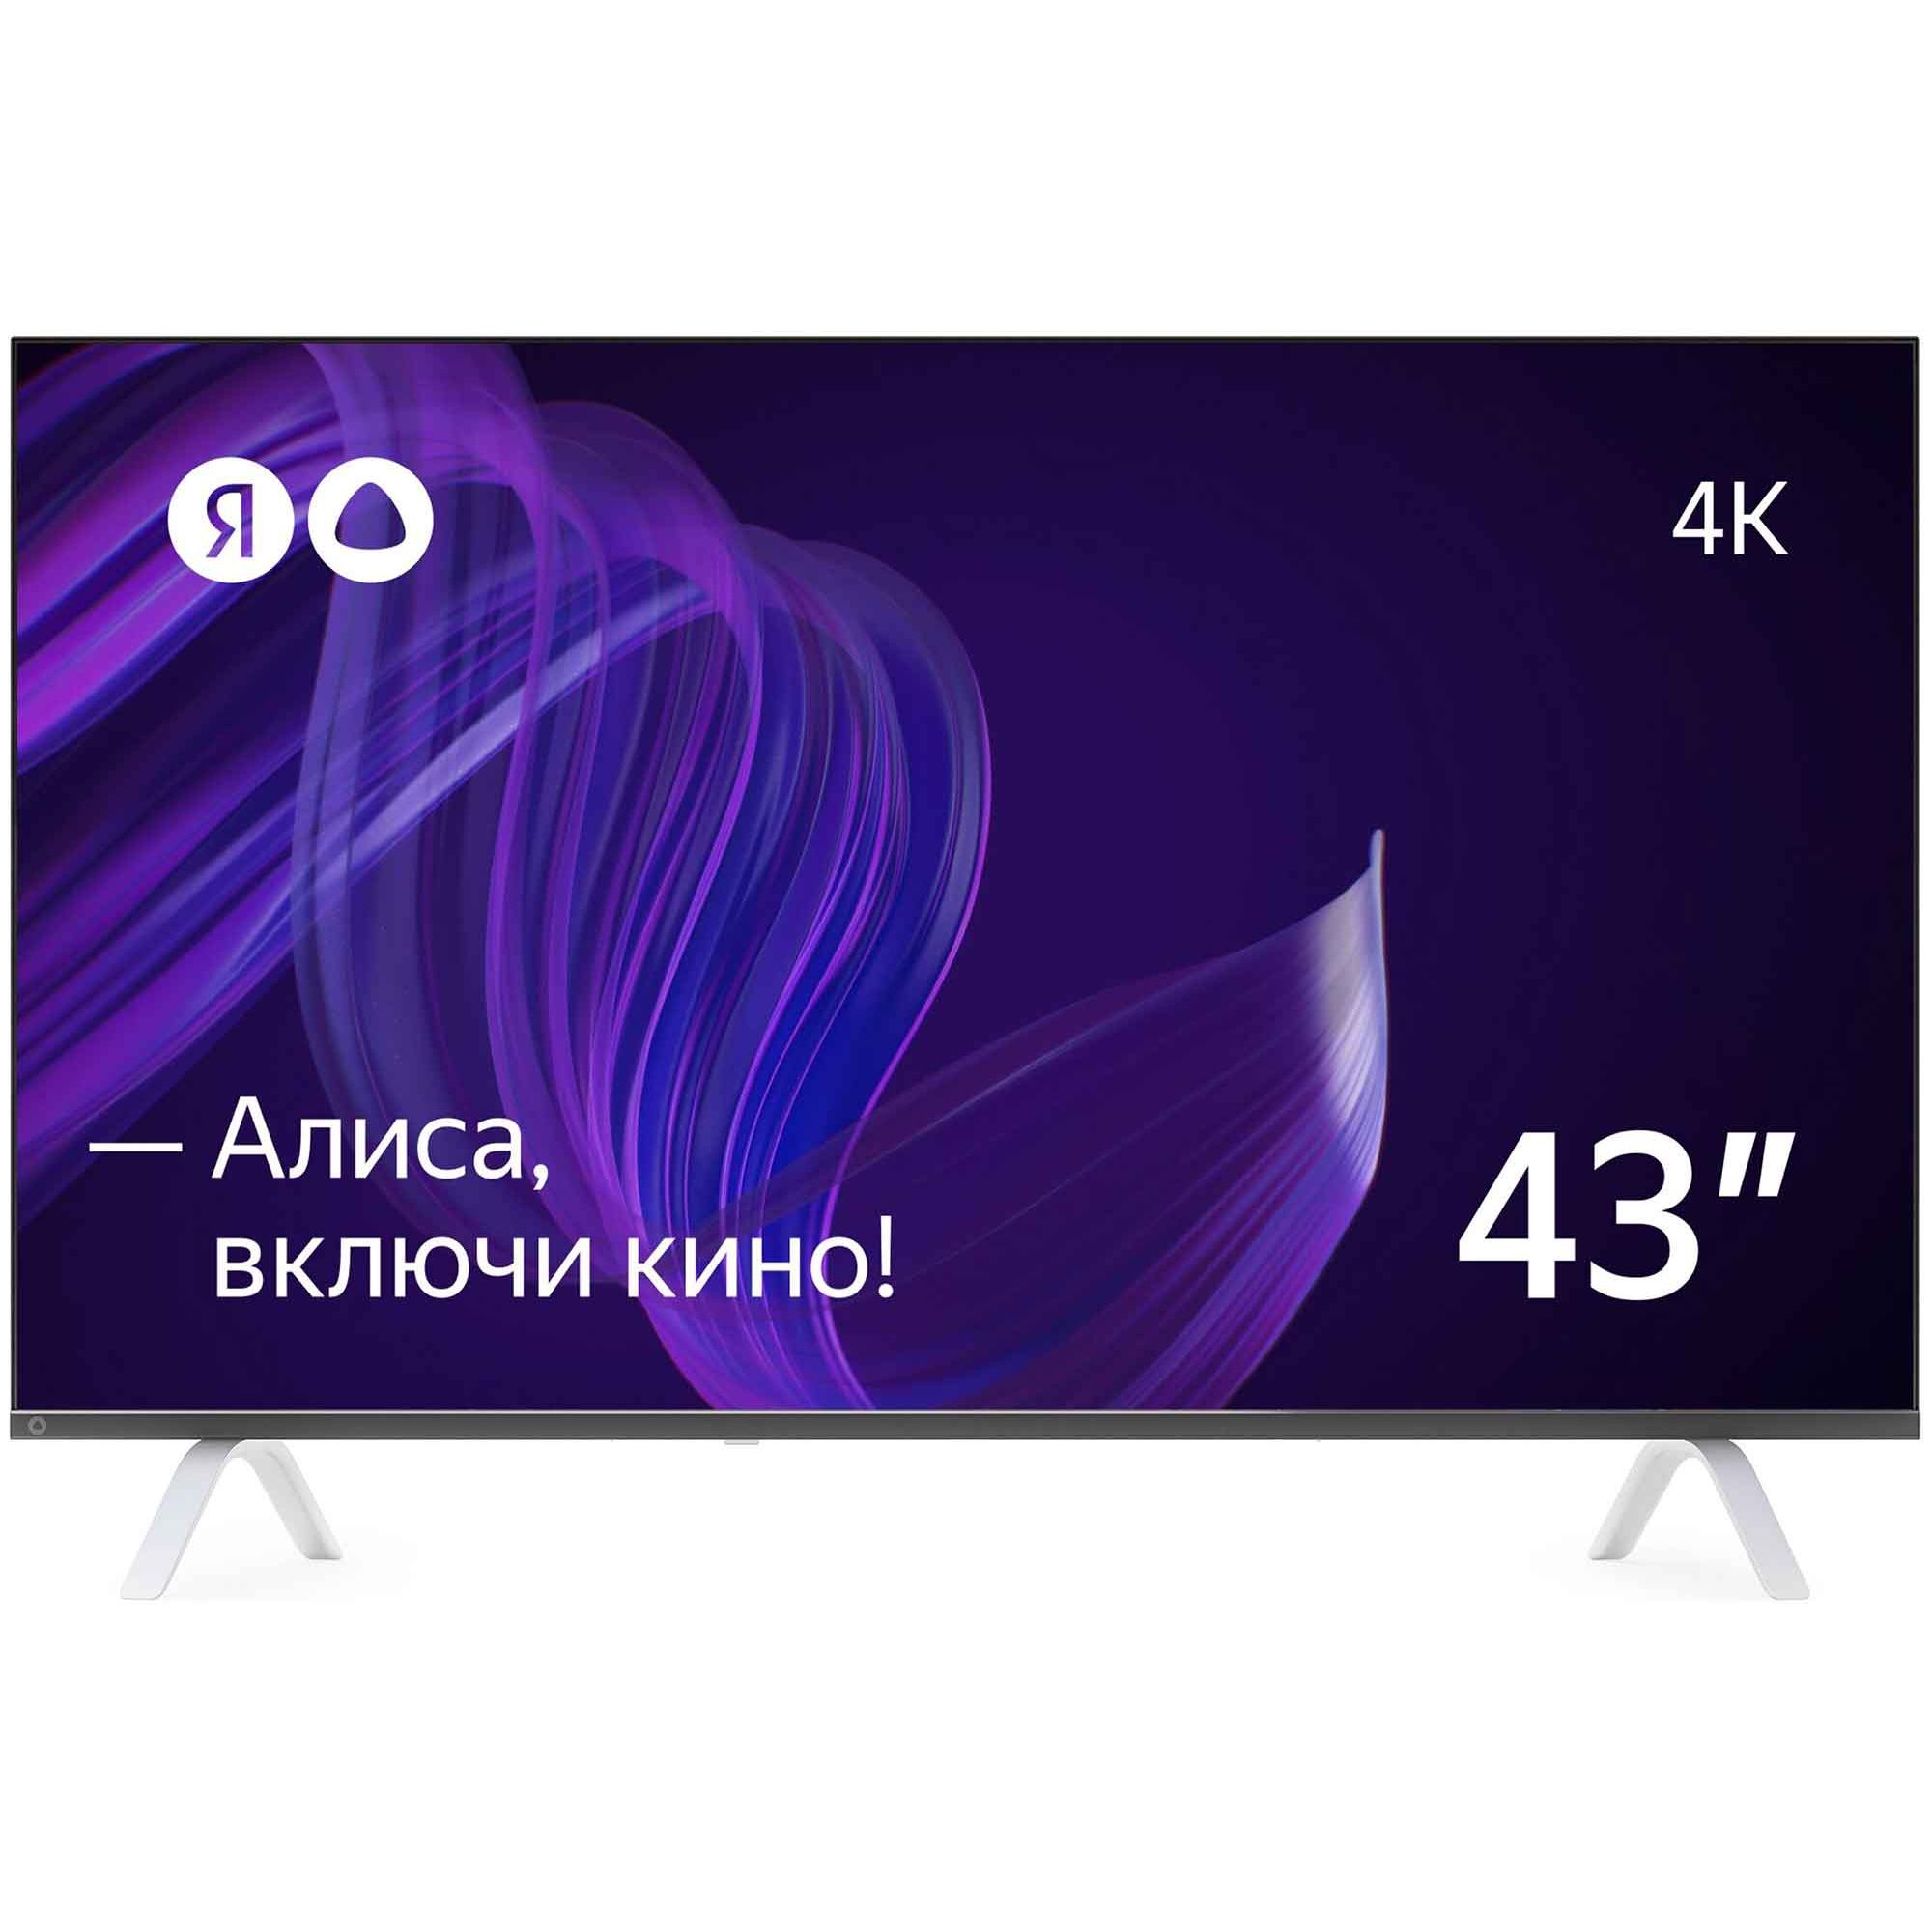 Телевизор Яндекс 43 YNDX-00071 YANDEX телевизор яндекс 43 yndx 00071 yandex